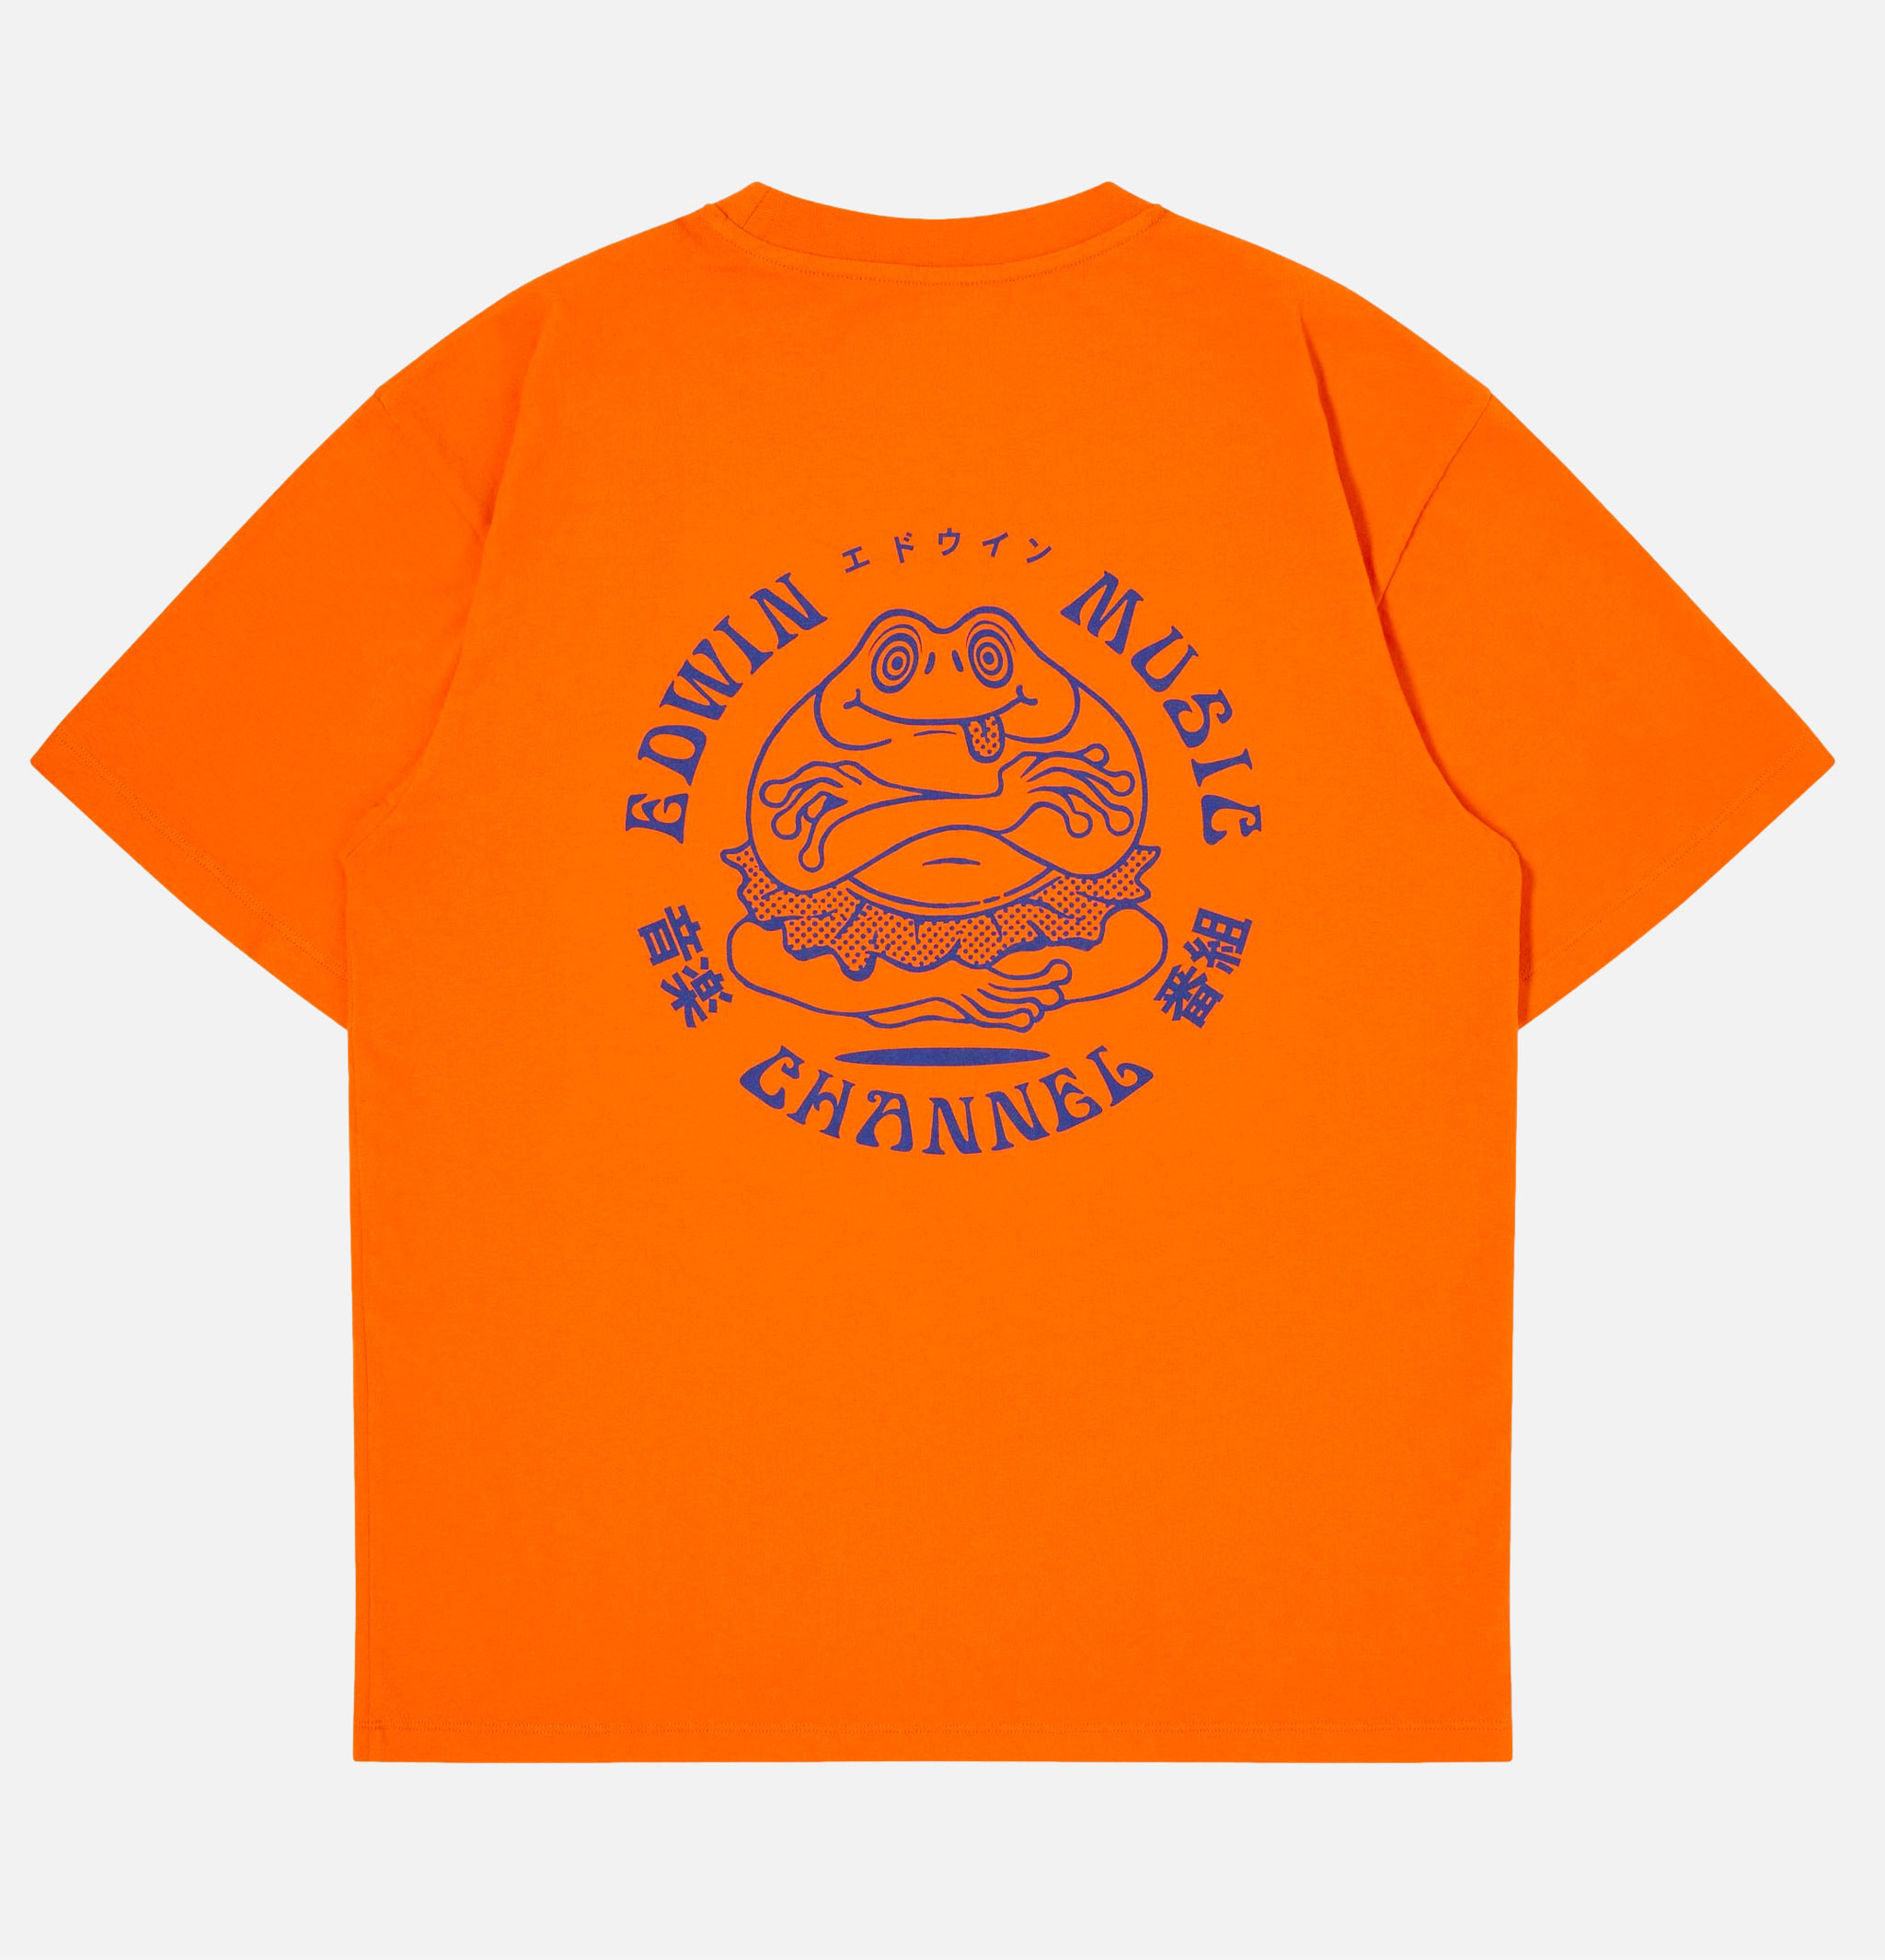 T-shirt Music Channel Orange